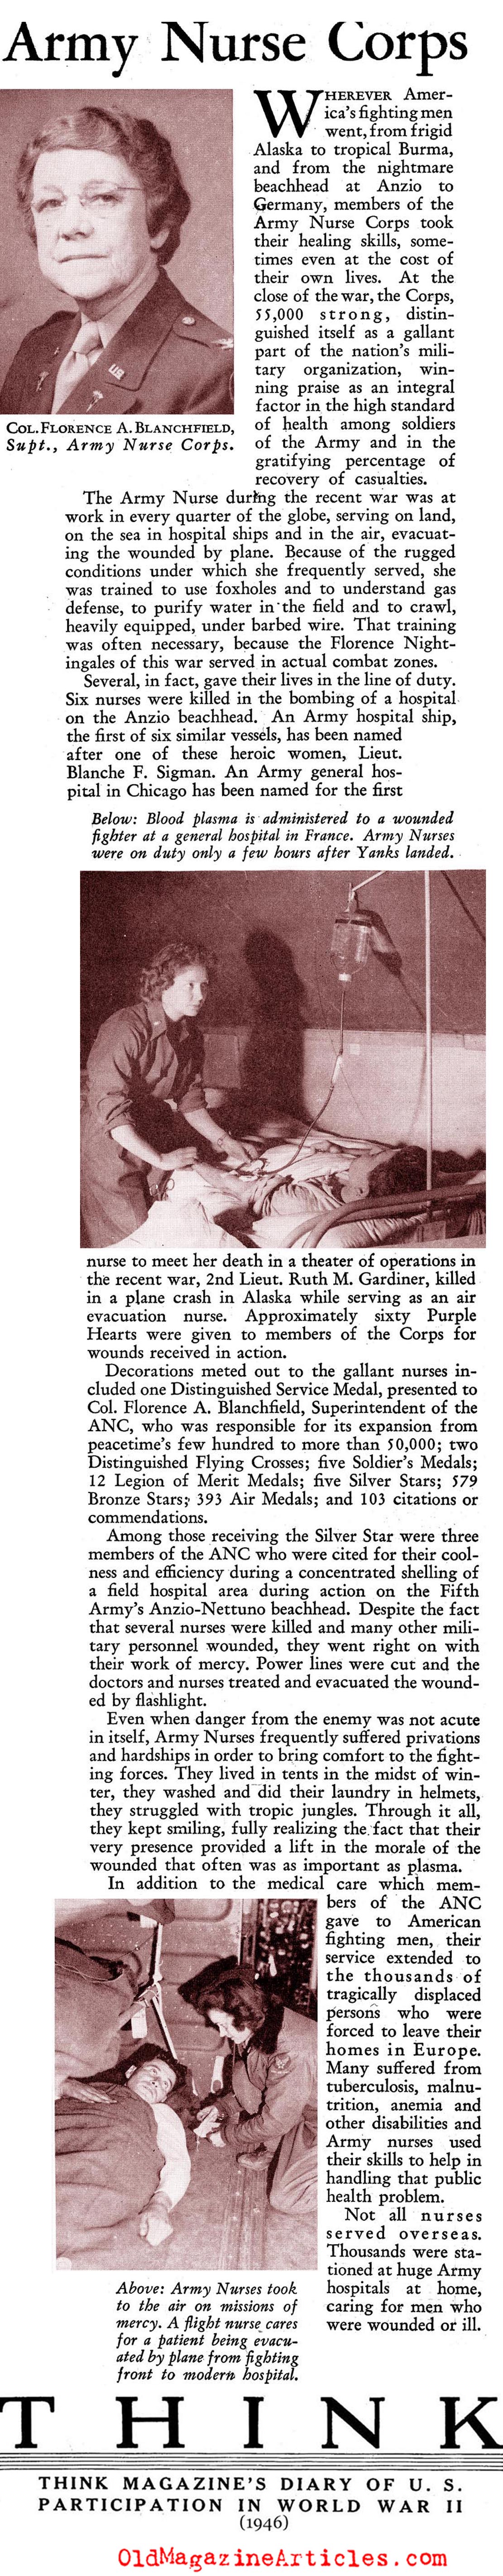 The U.S. Army Nurse Corps (Think Magazine, 1946)